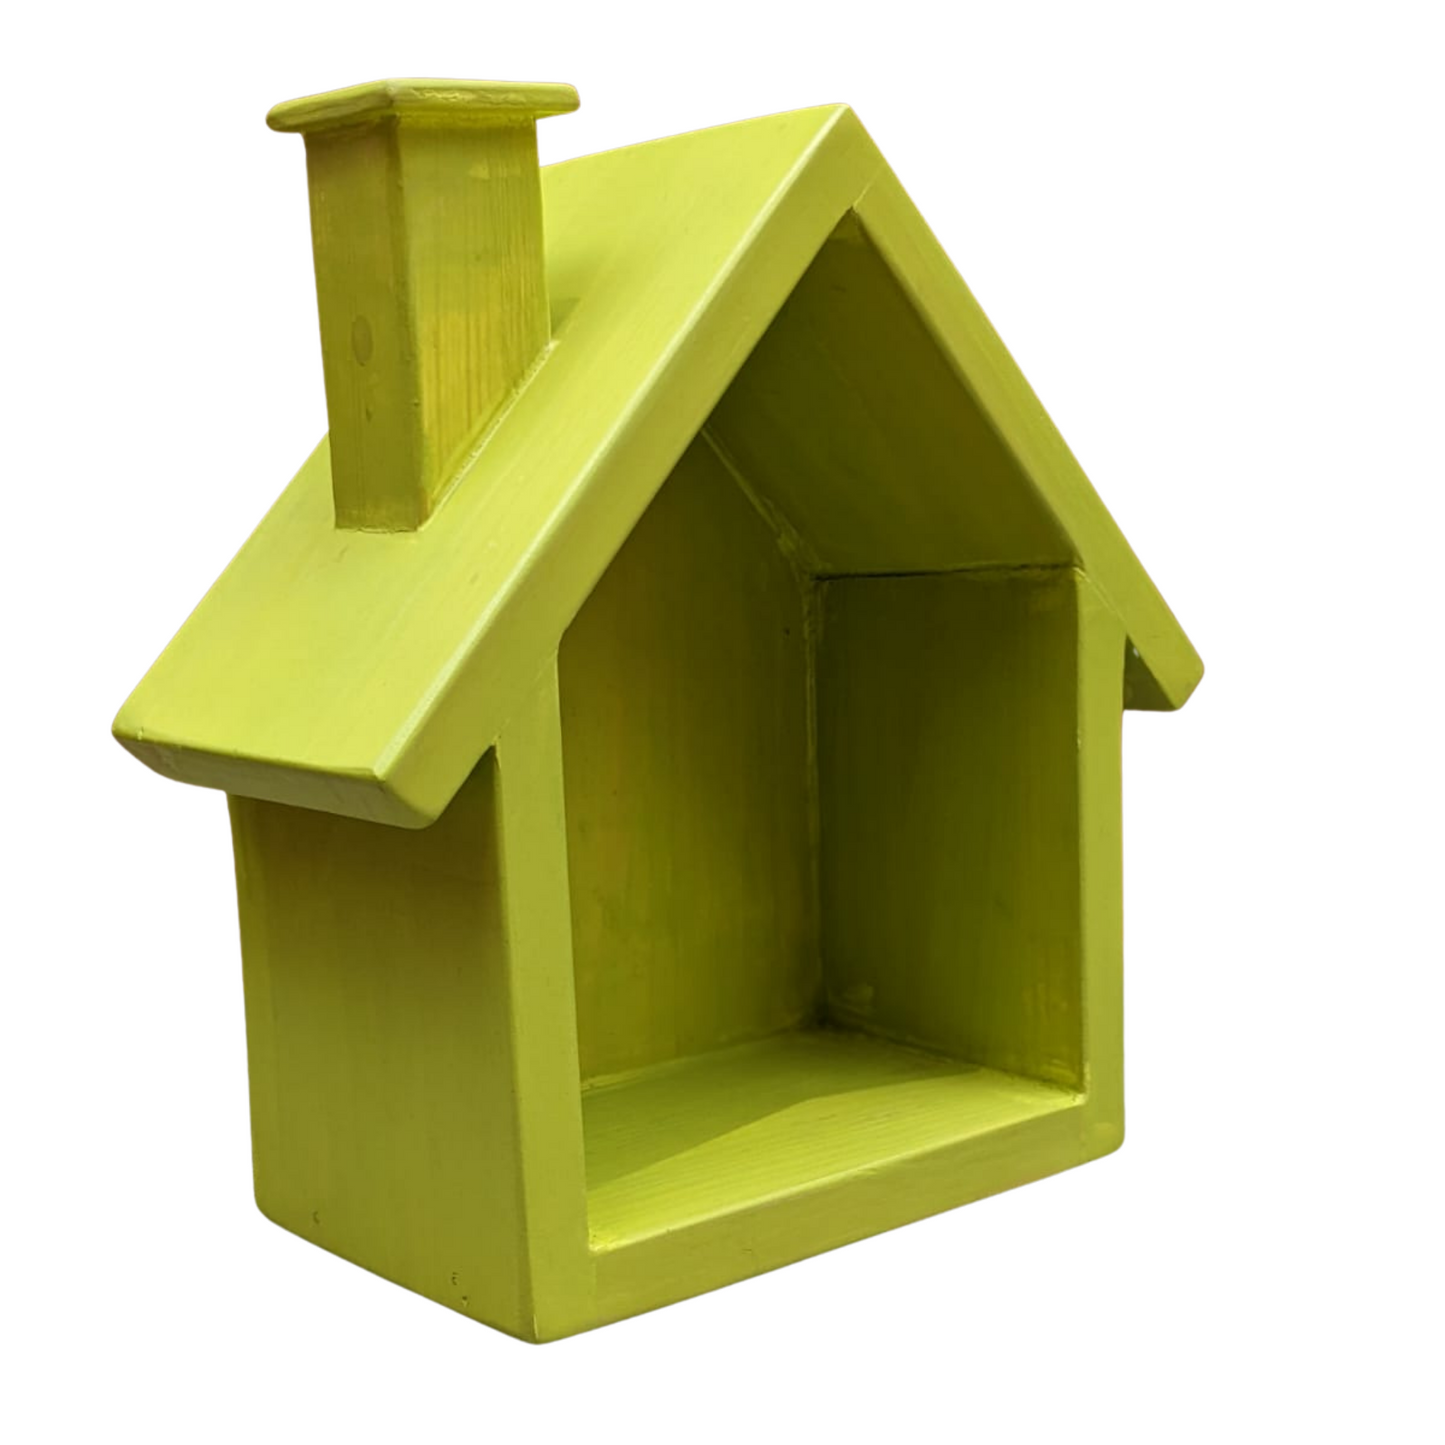 CustHum-Small house shaped wooden decor-light green (ISO)